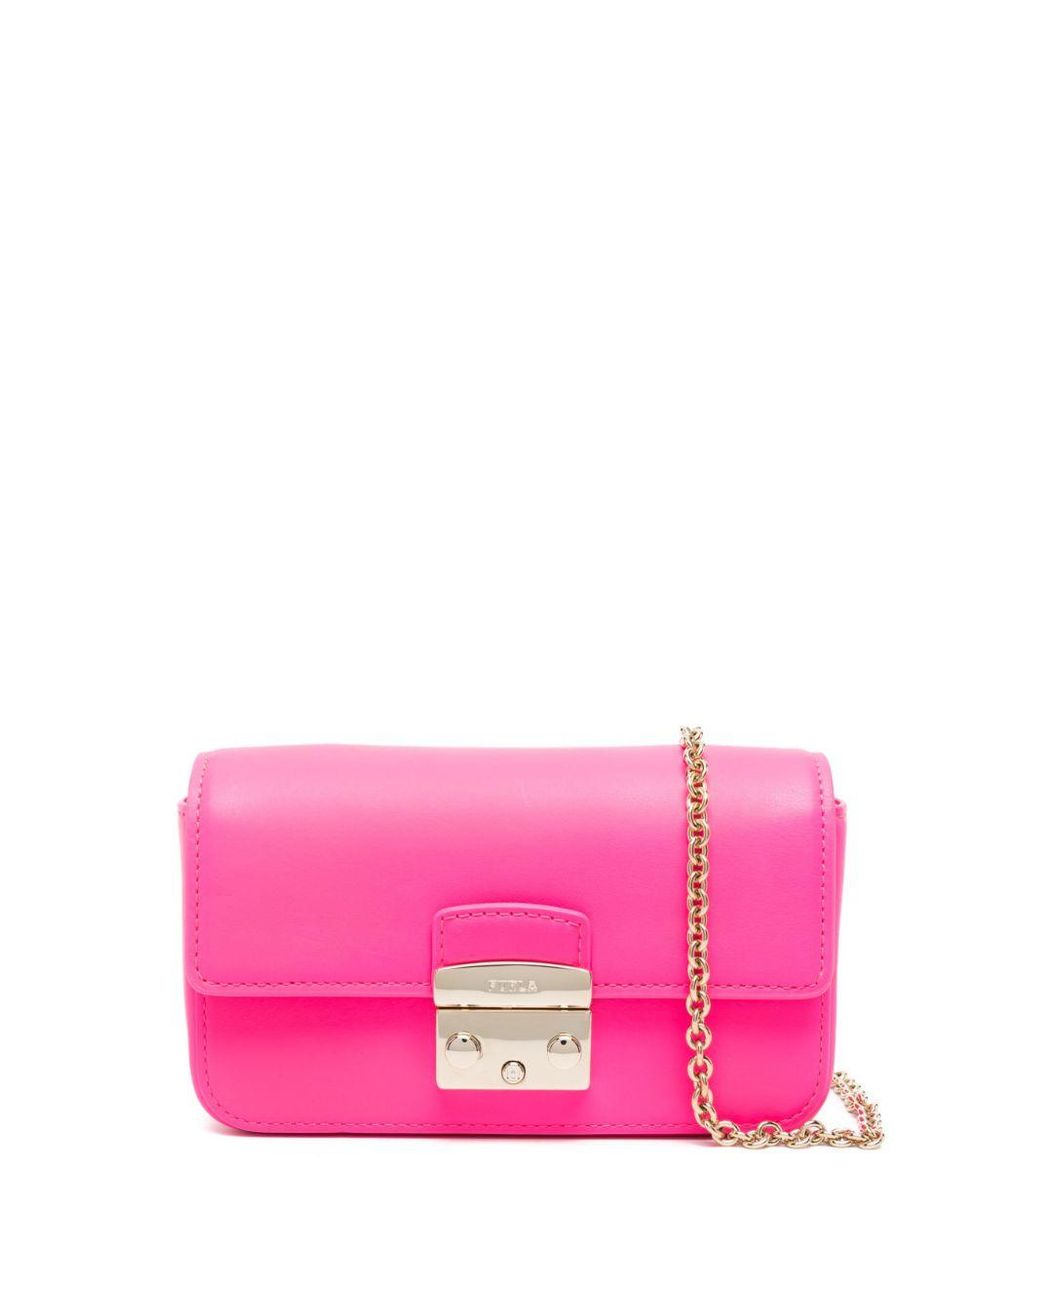 Furla Metropolis Leather Mini Bag in Pink | Lyst UK